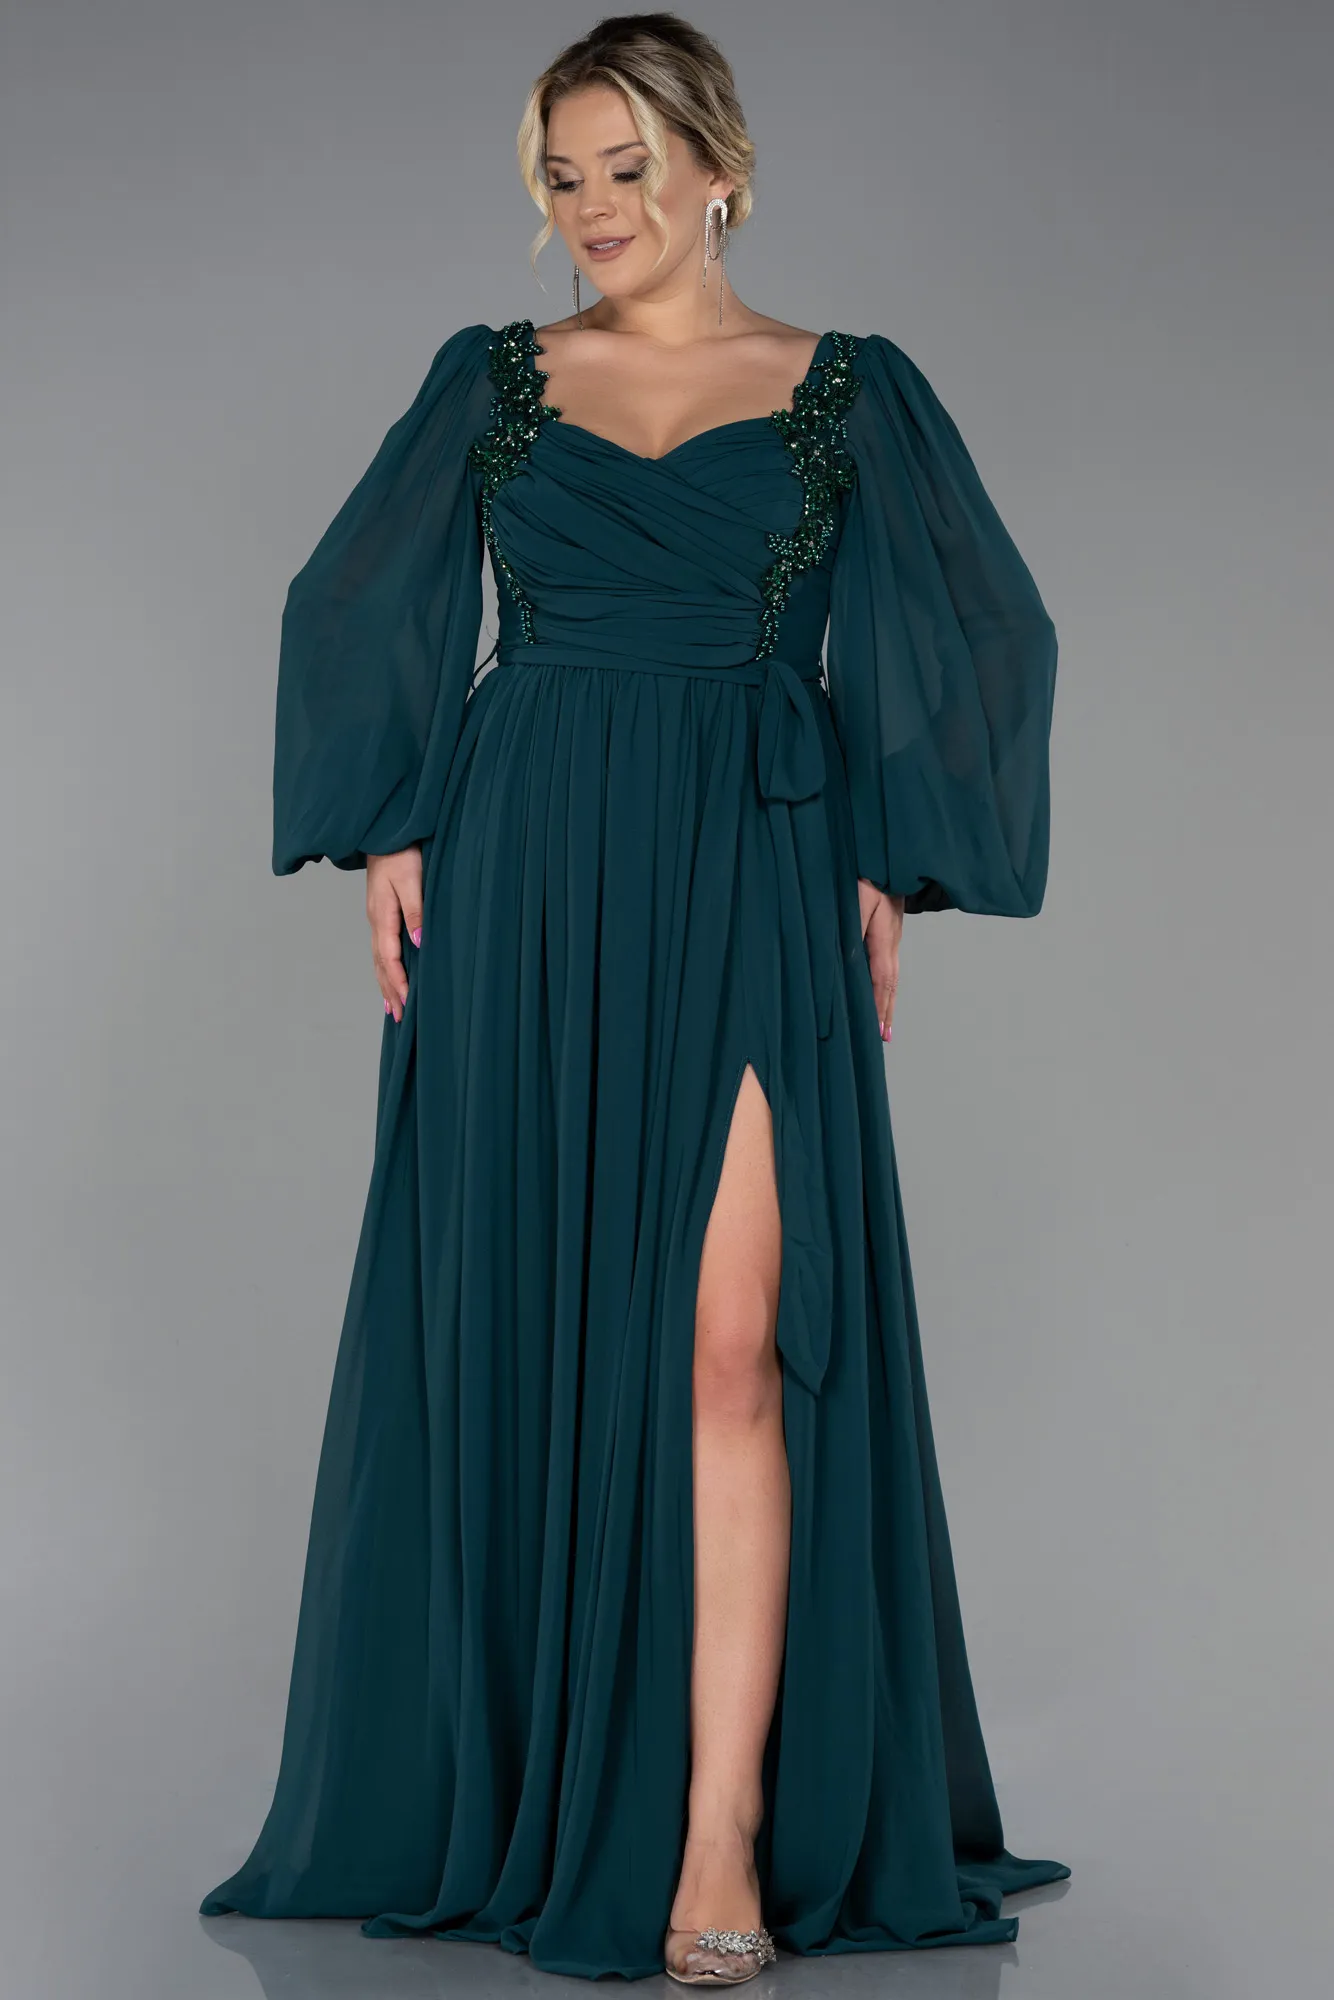 Emerald Green-Long Chiffon Plus Size Evening Dress ABU3244